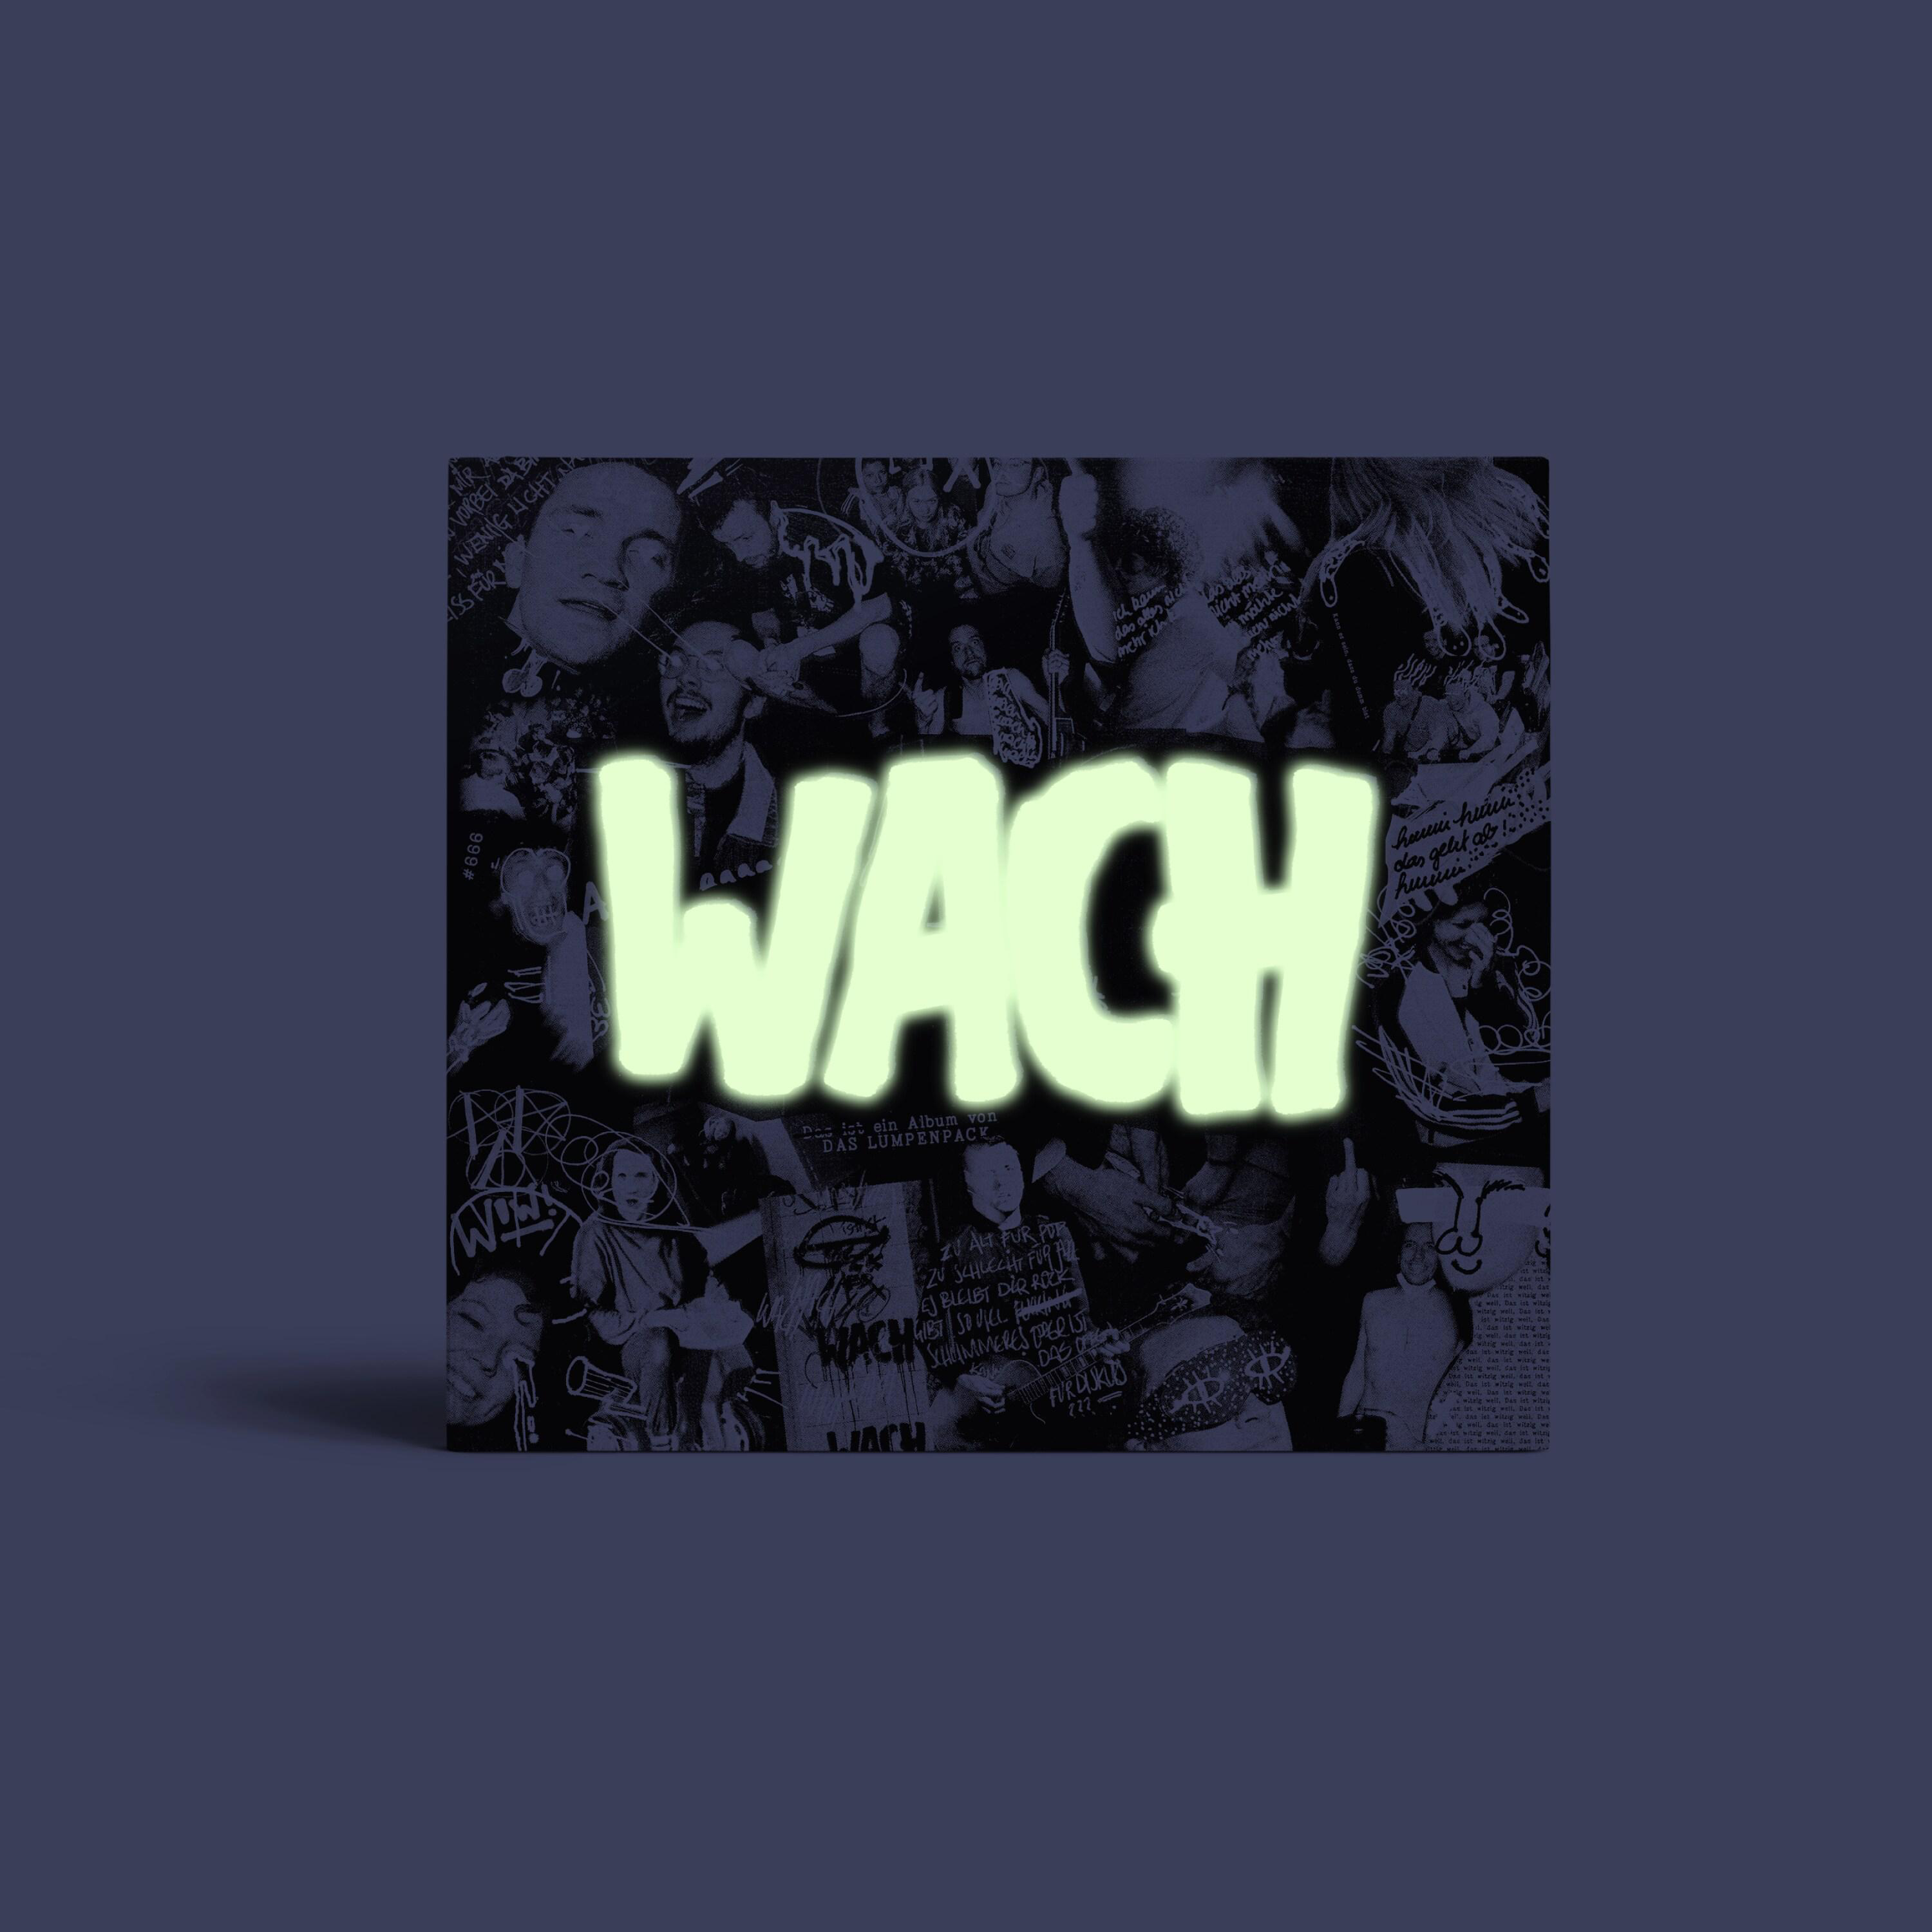 Wach (Vinyl) - - Lumpenpack Gatefold) (2LP Das